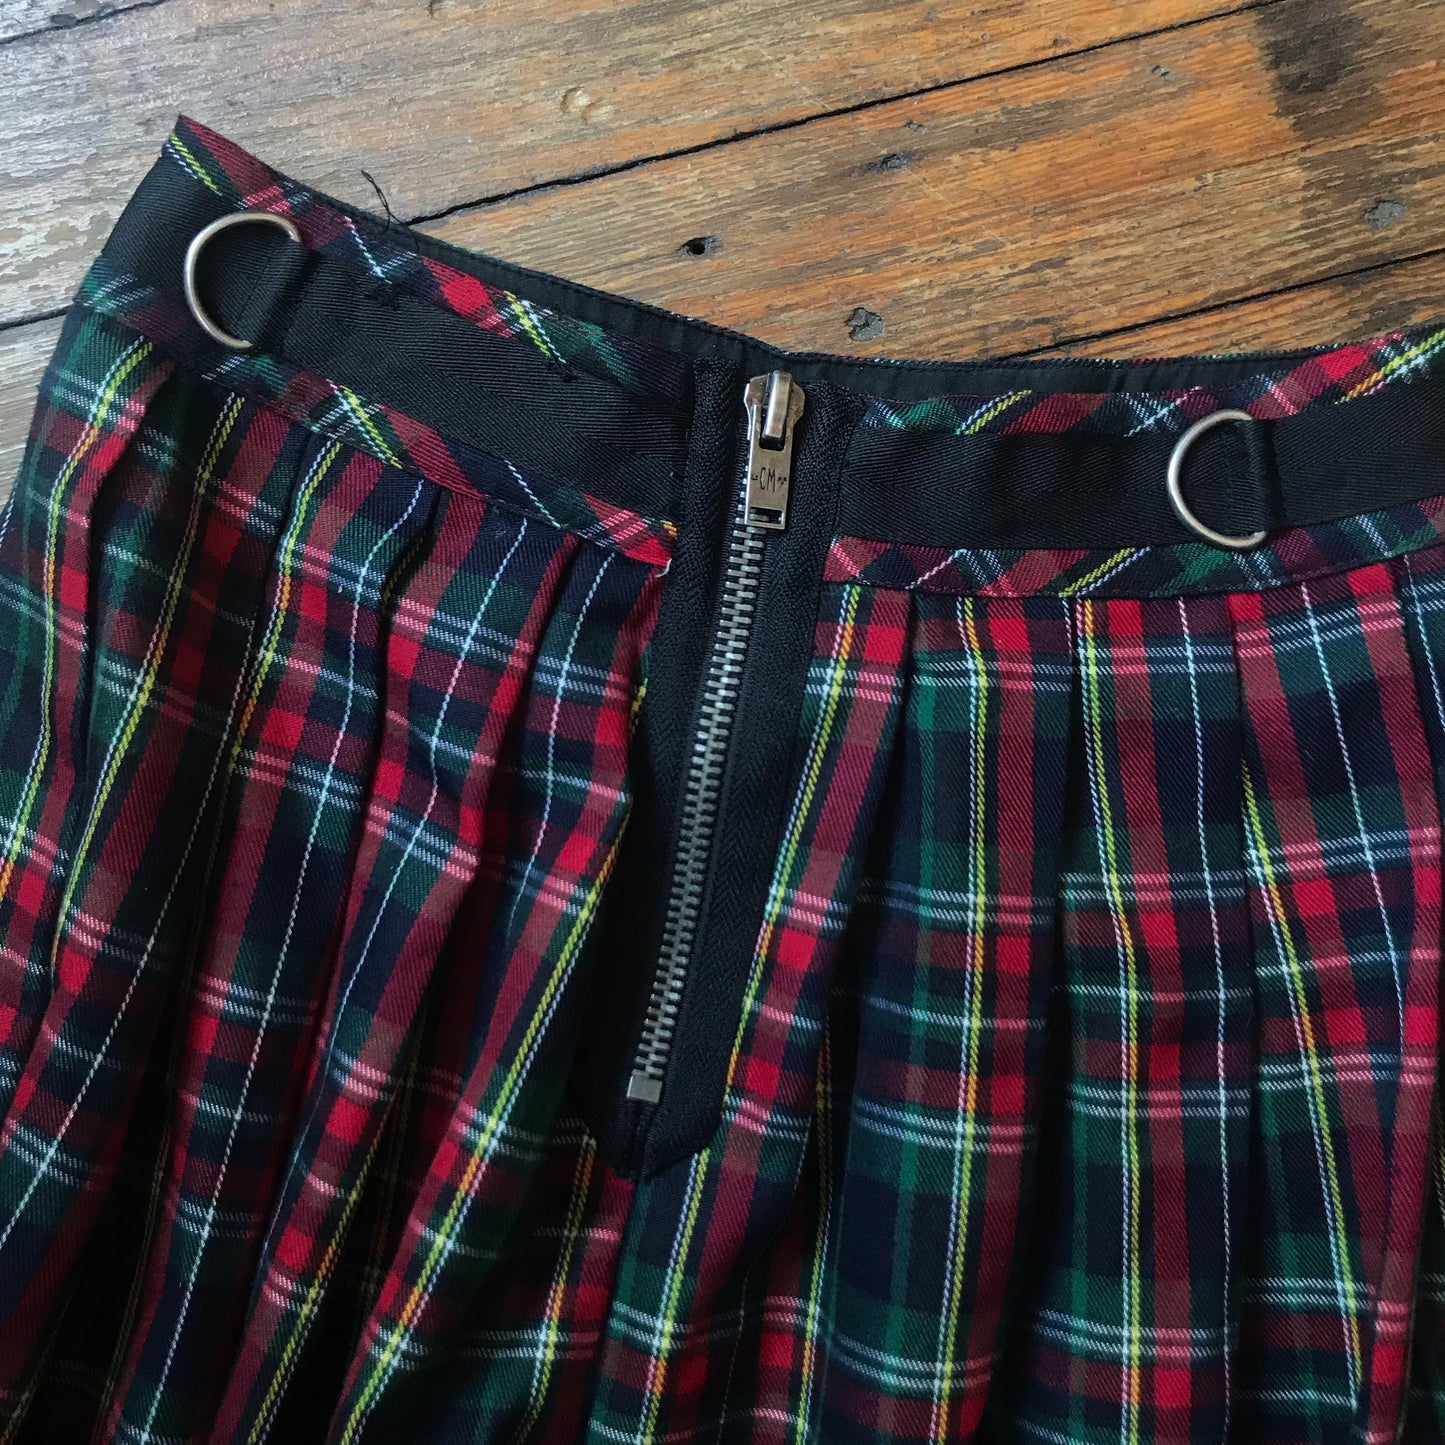 Green & Red Plaid O-Ring Belt Mini Tennis Skirt